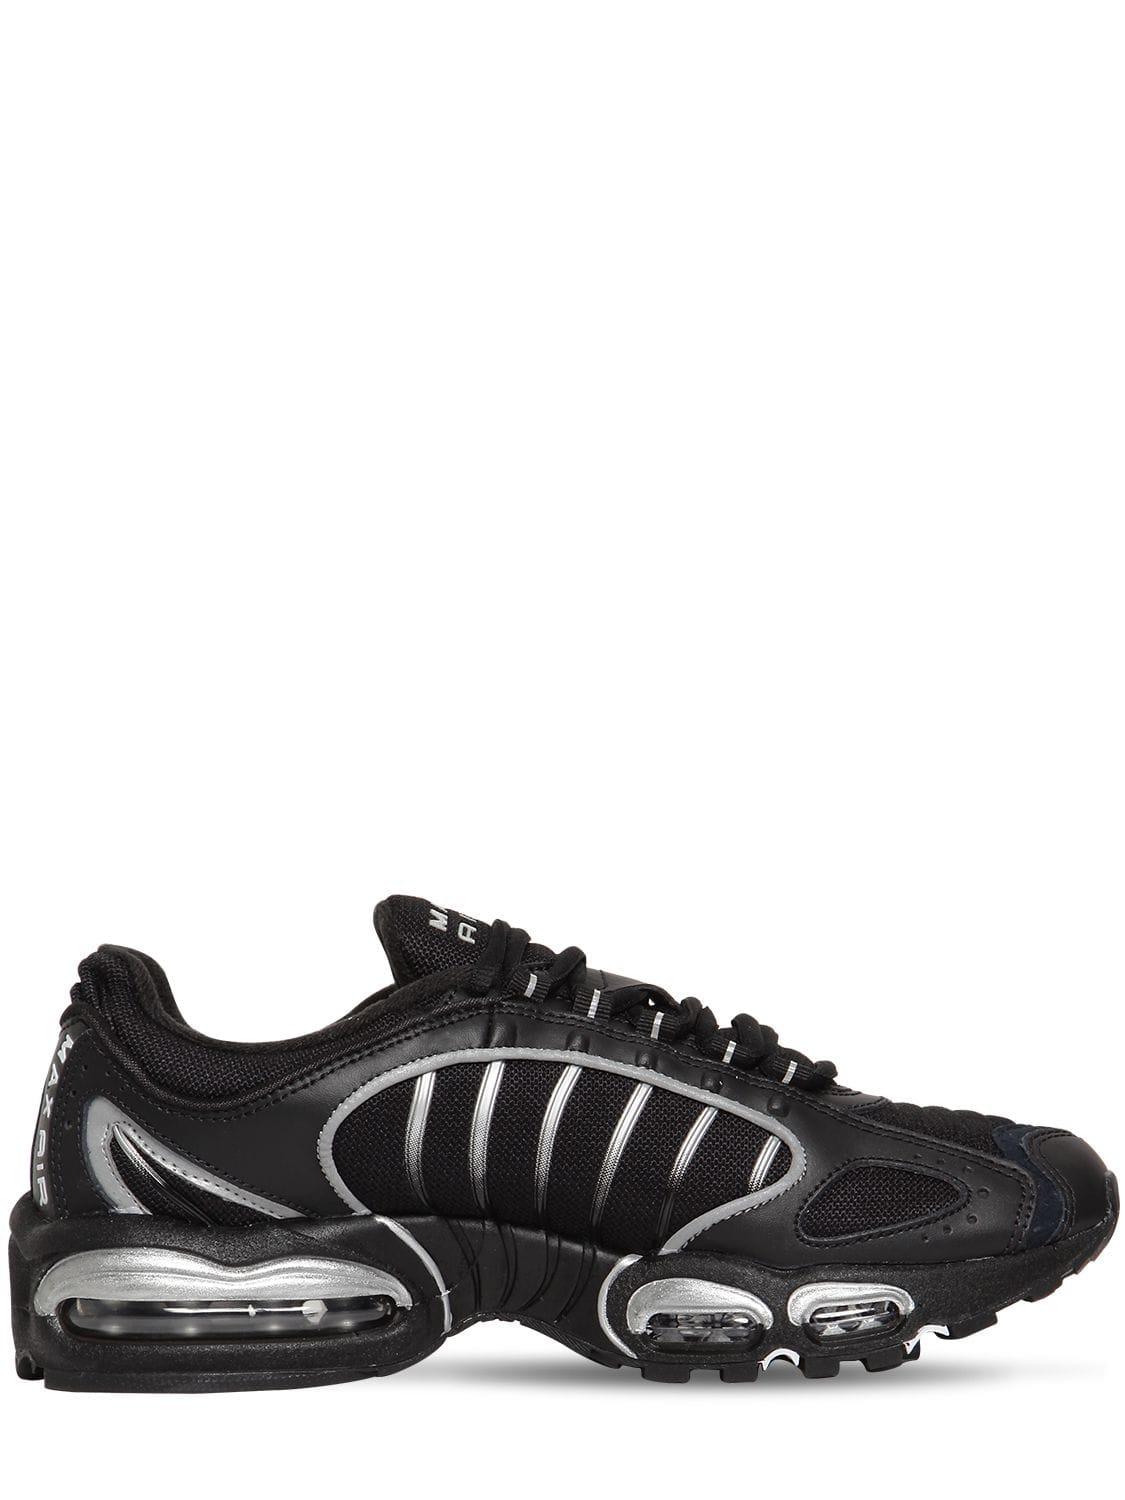 Nike Air Max Tailwind Iv Sneakers in Black/Black/Black (White) for Men -  Lyst